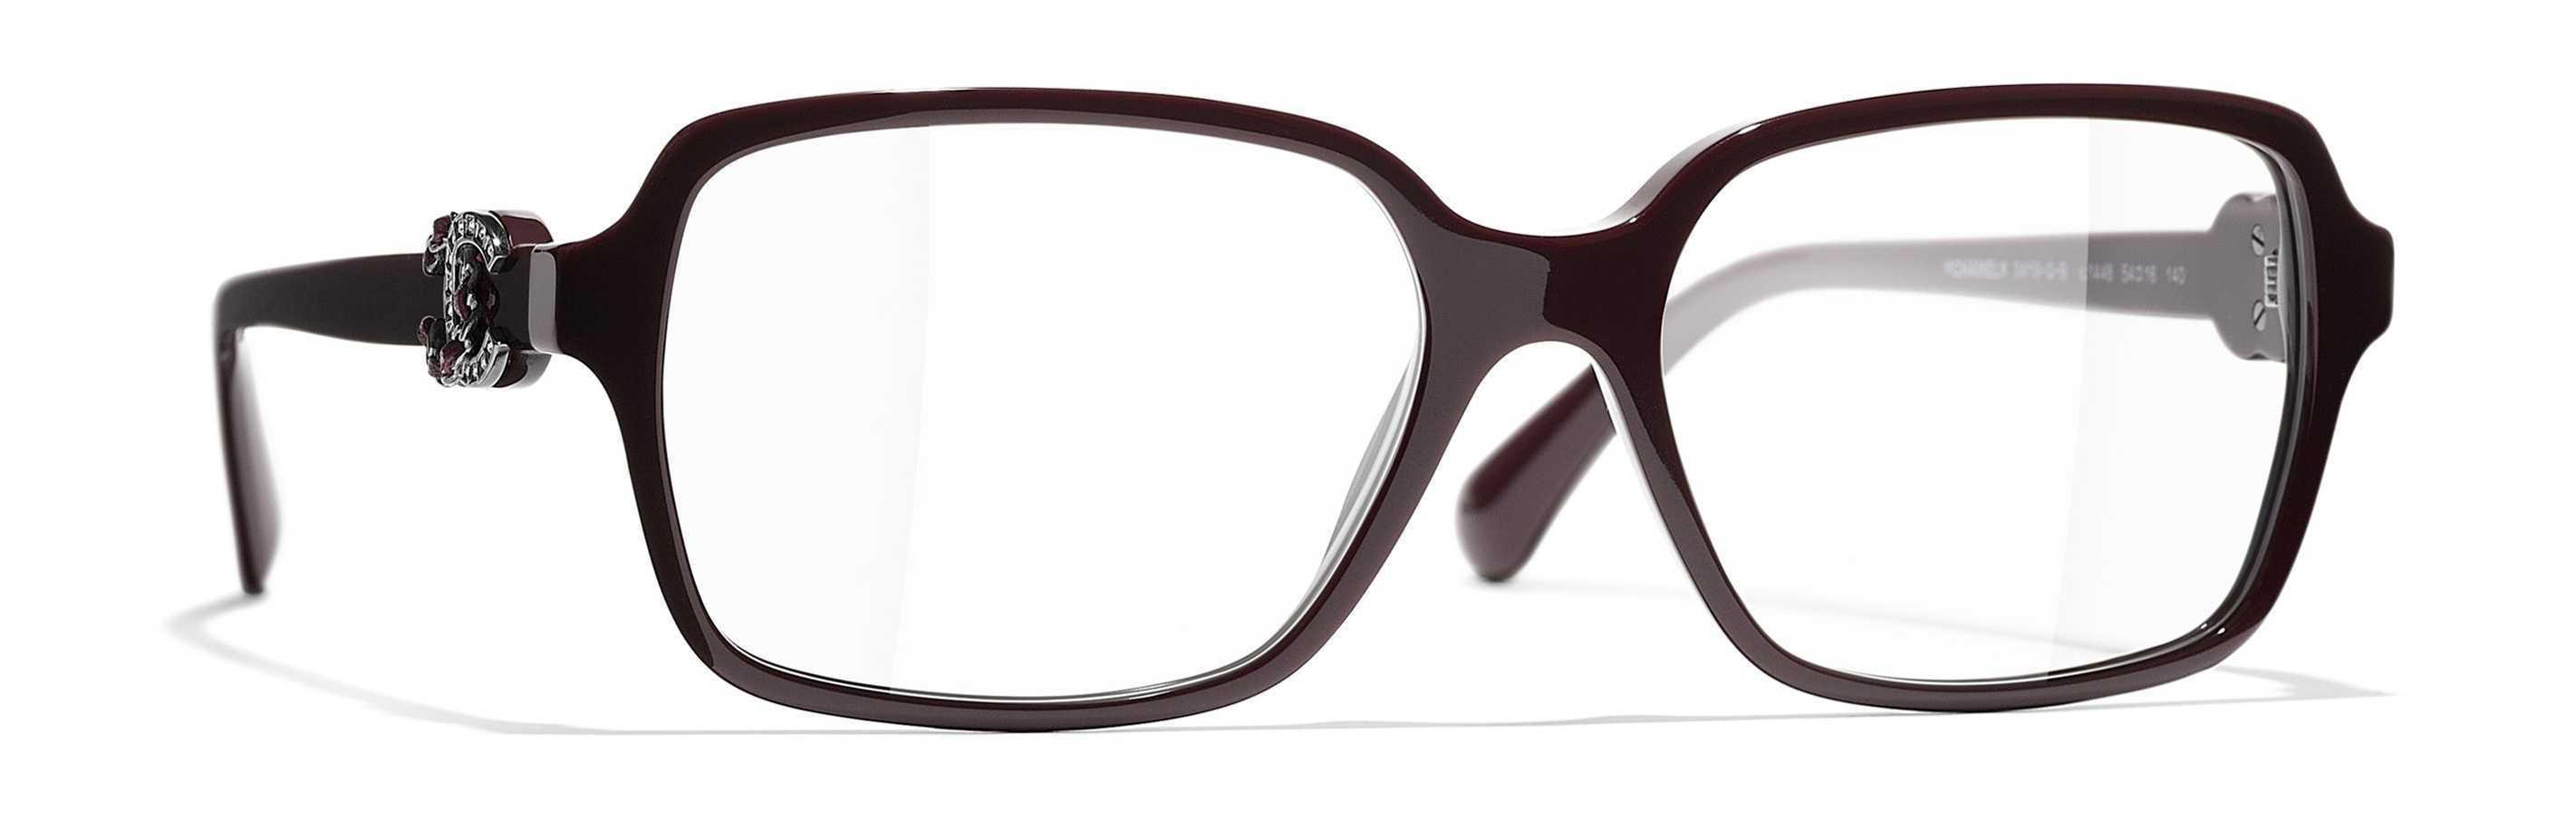 Eyeglasses CHANEL CH 3419QB 1448 52/16 Woman Rouge square frames Full Frame  Glasses Classic 52mmx16mm 313$CA